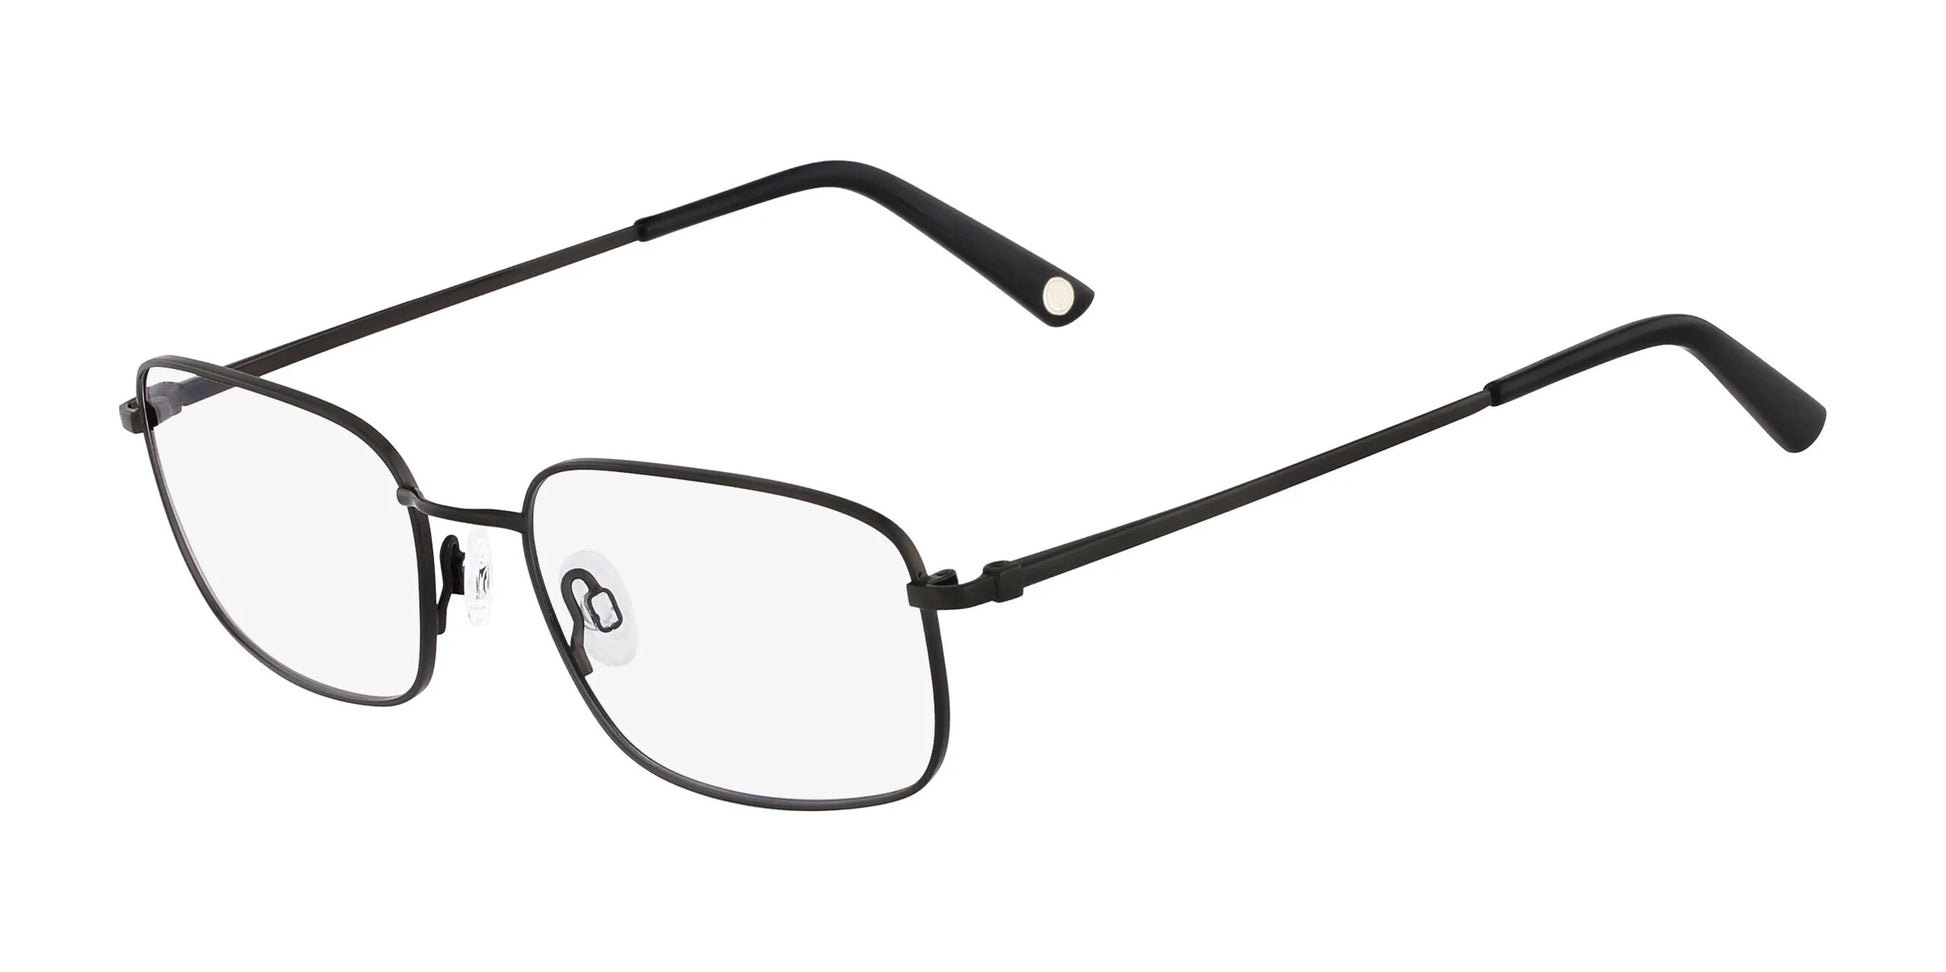 Flexon BENJAMIN 600 Eyeglasses Black Chrome